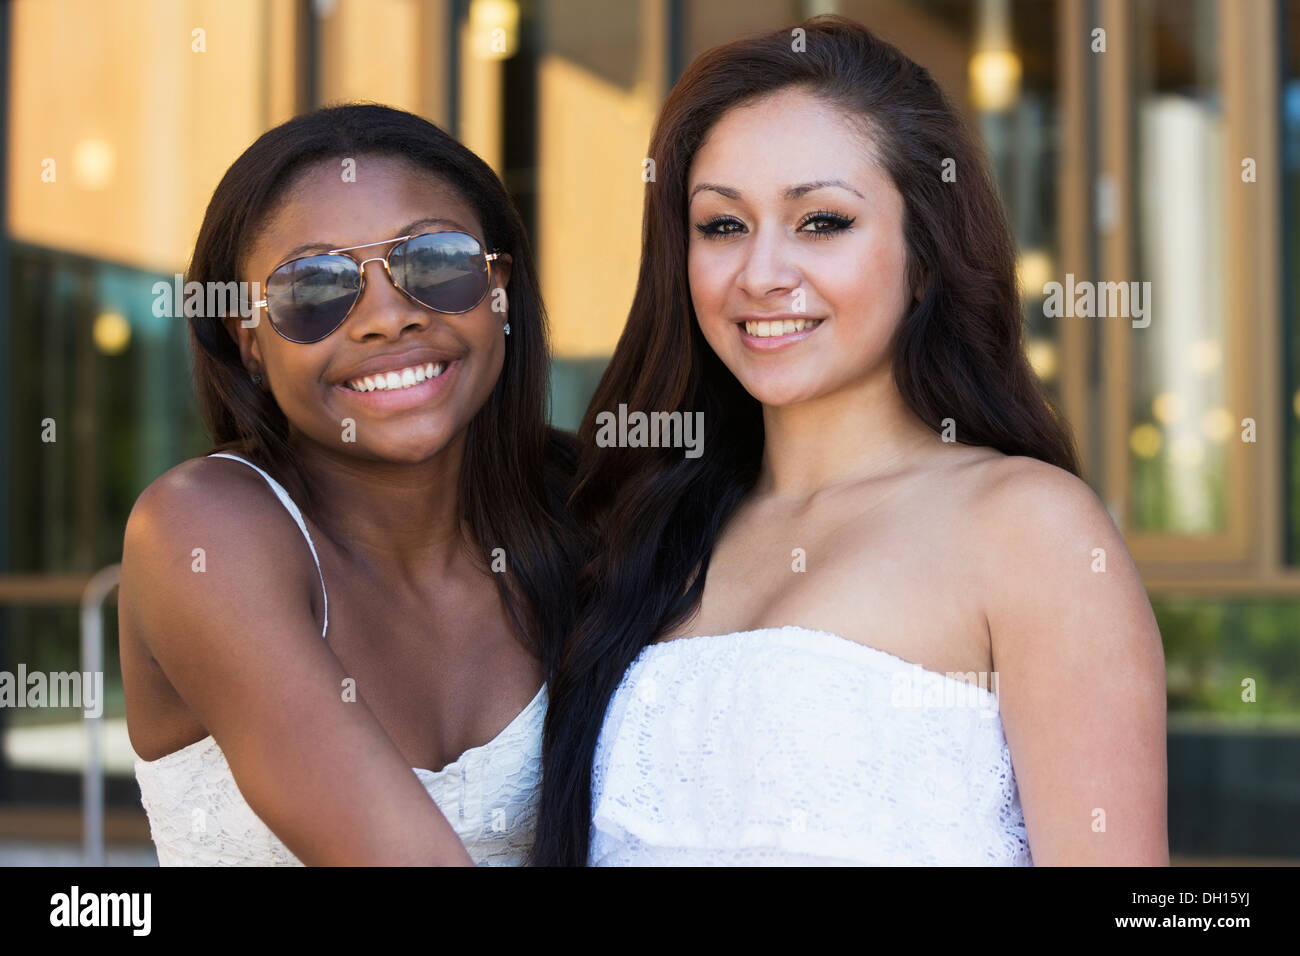 Teenage girls smiling outdoors Stock Photo